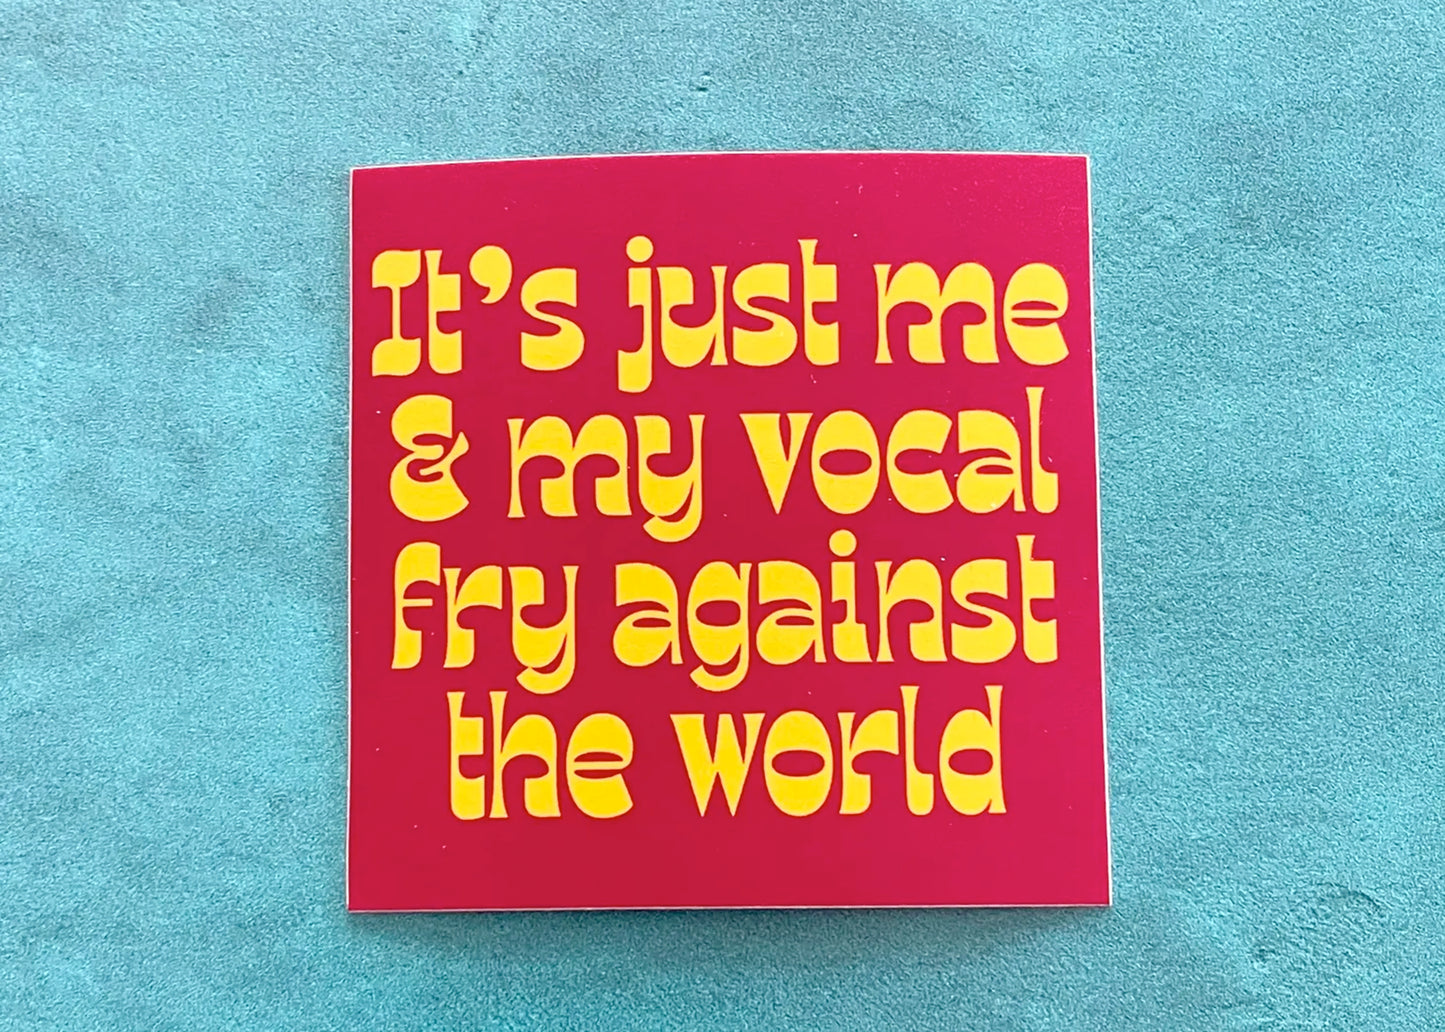 Vocal Fry Sticker